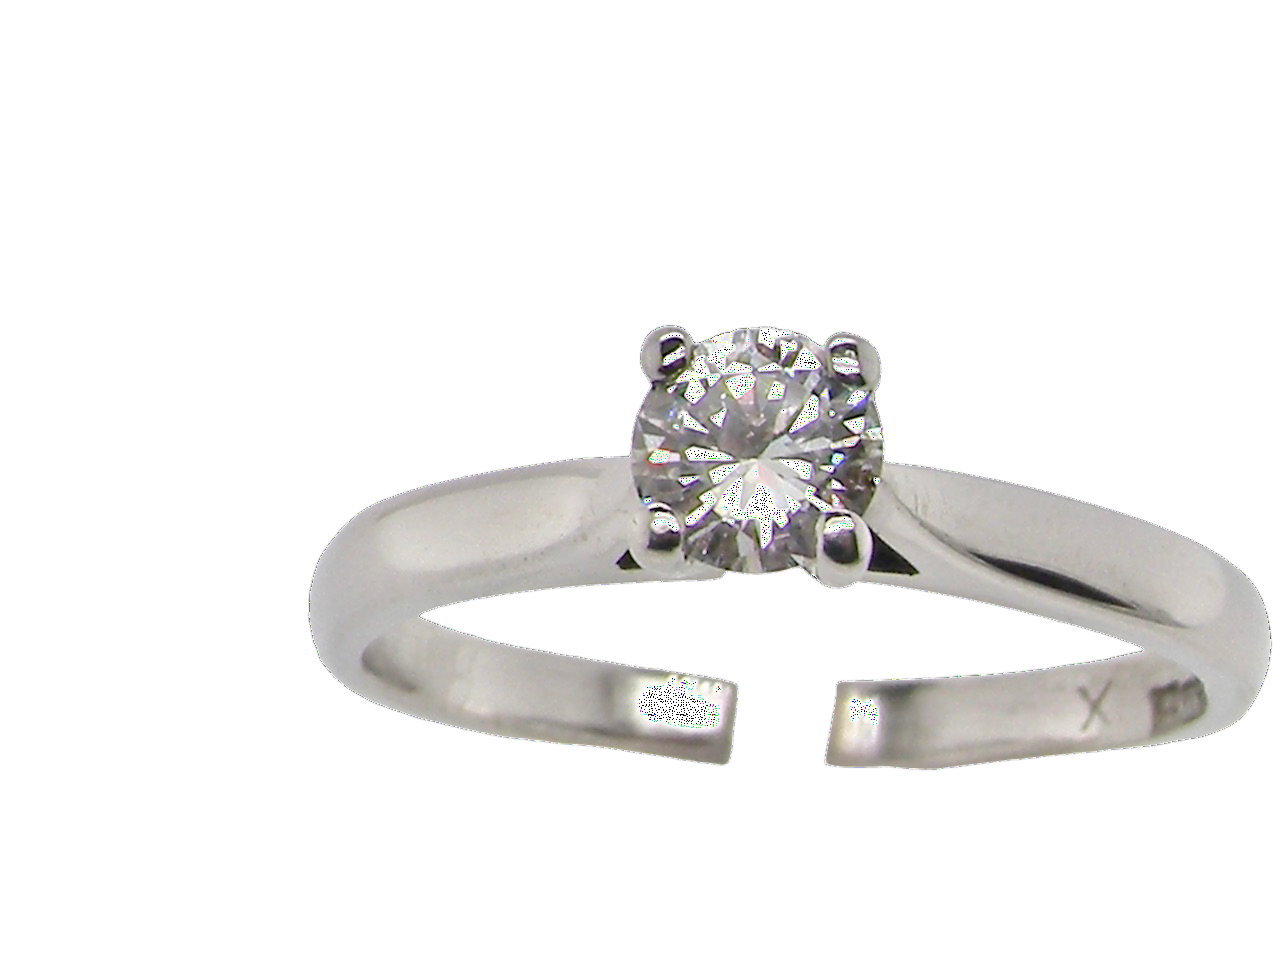 A palladium solitaire diamond ring